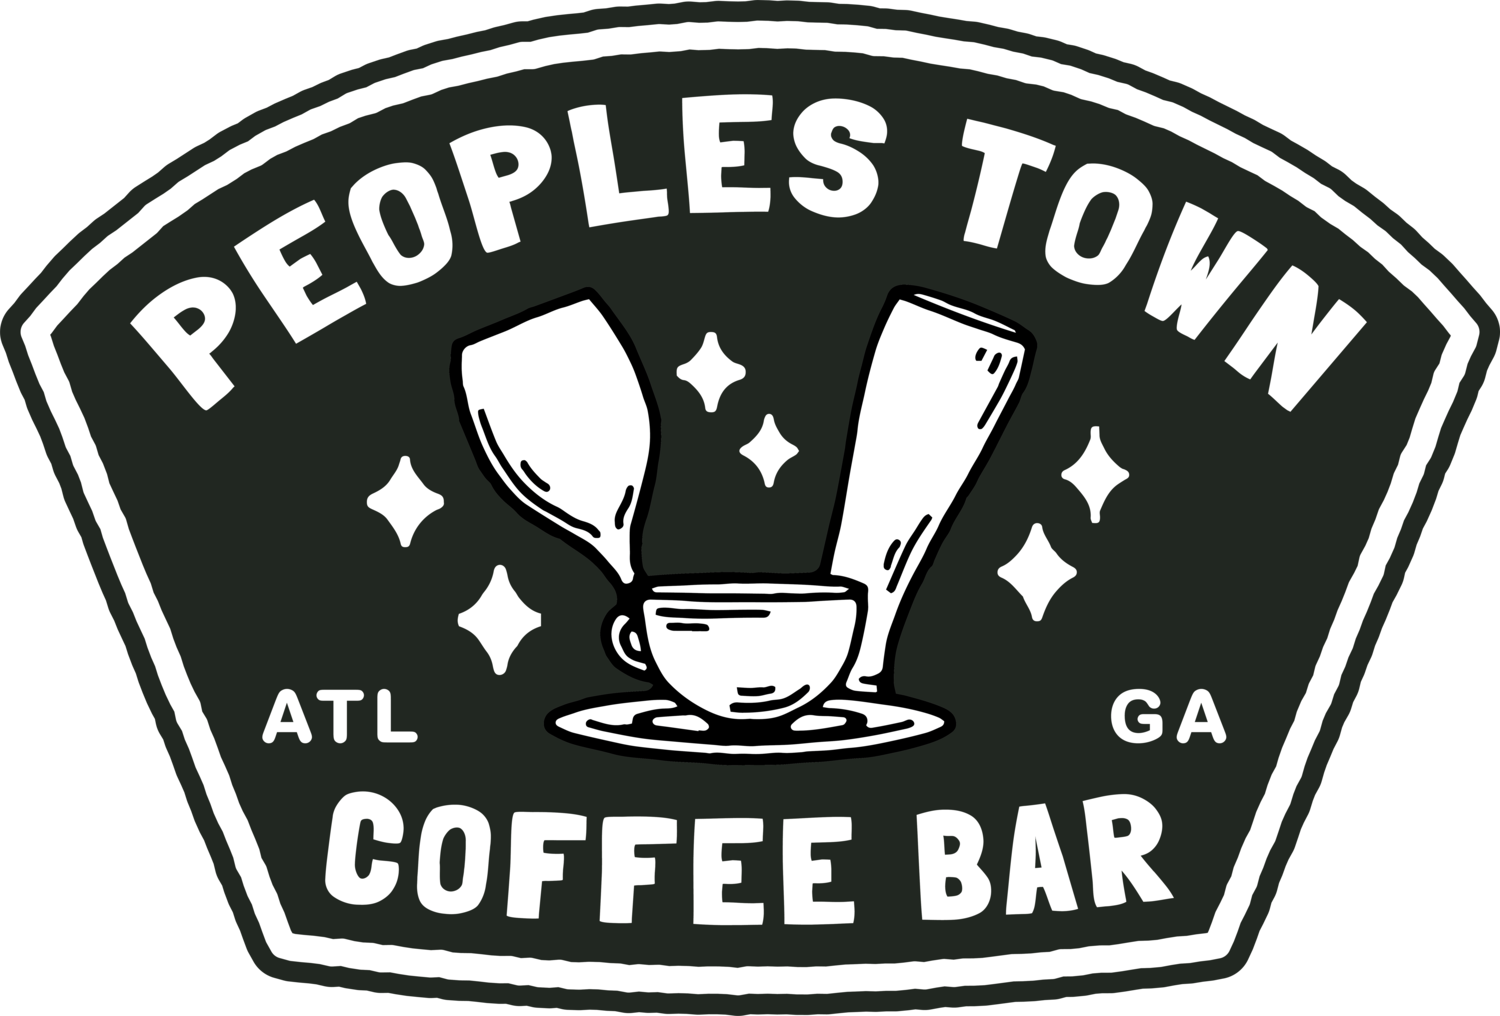 Peoples Town Coffee Bar